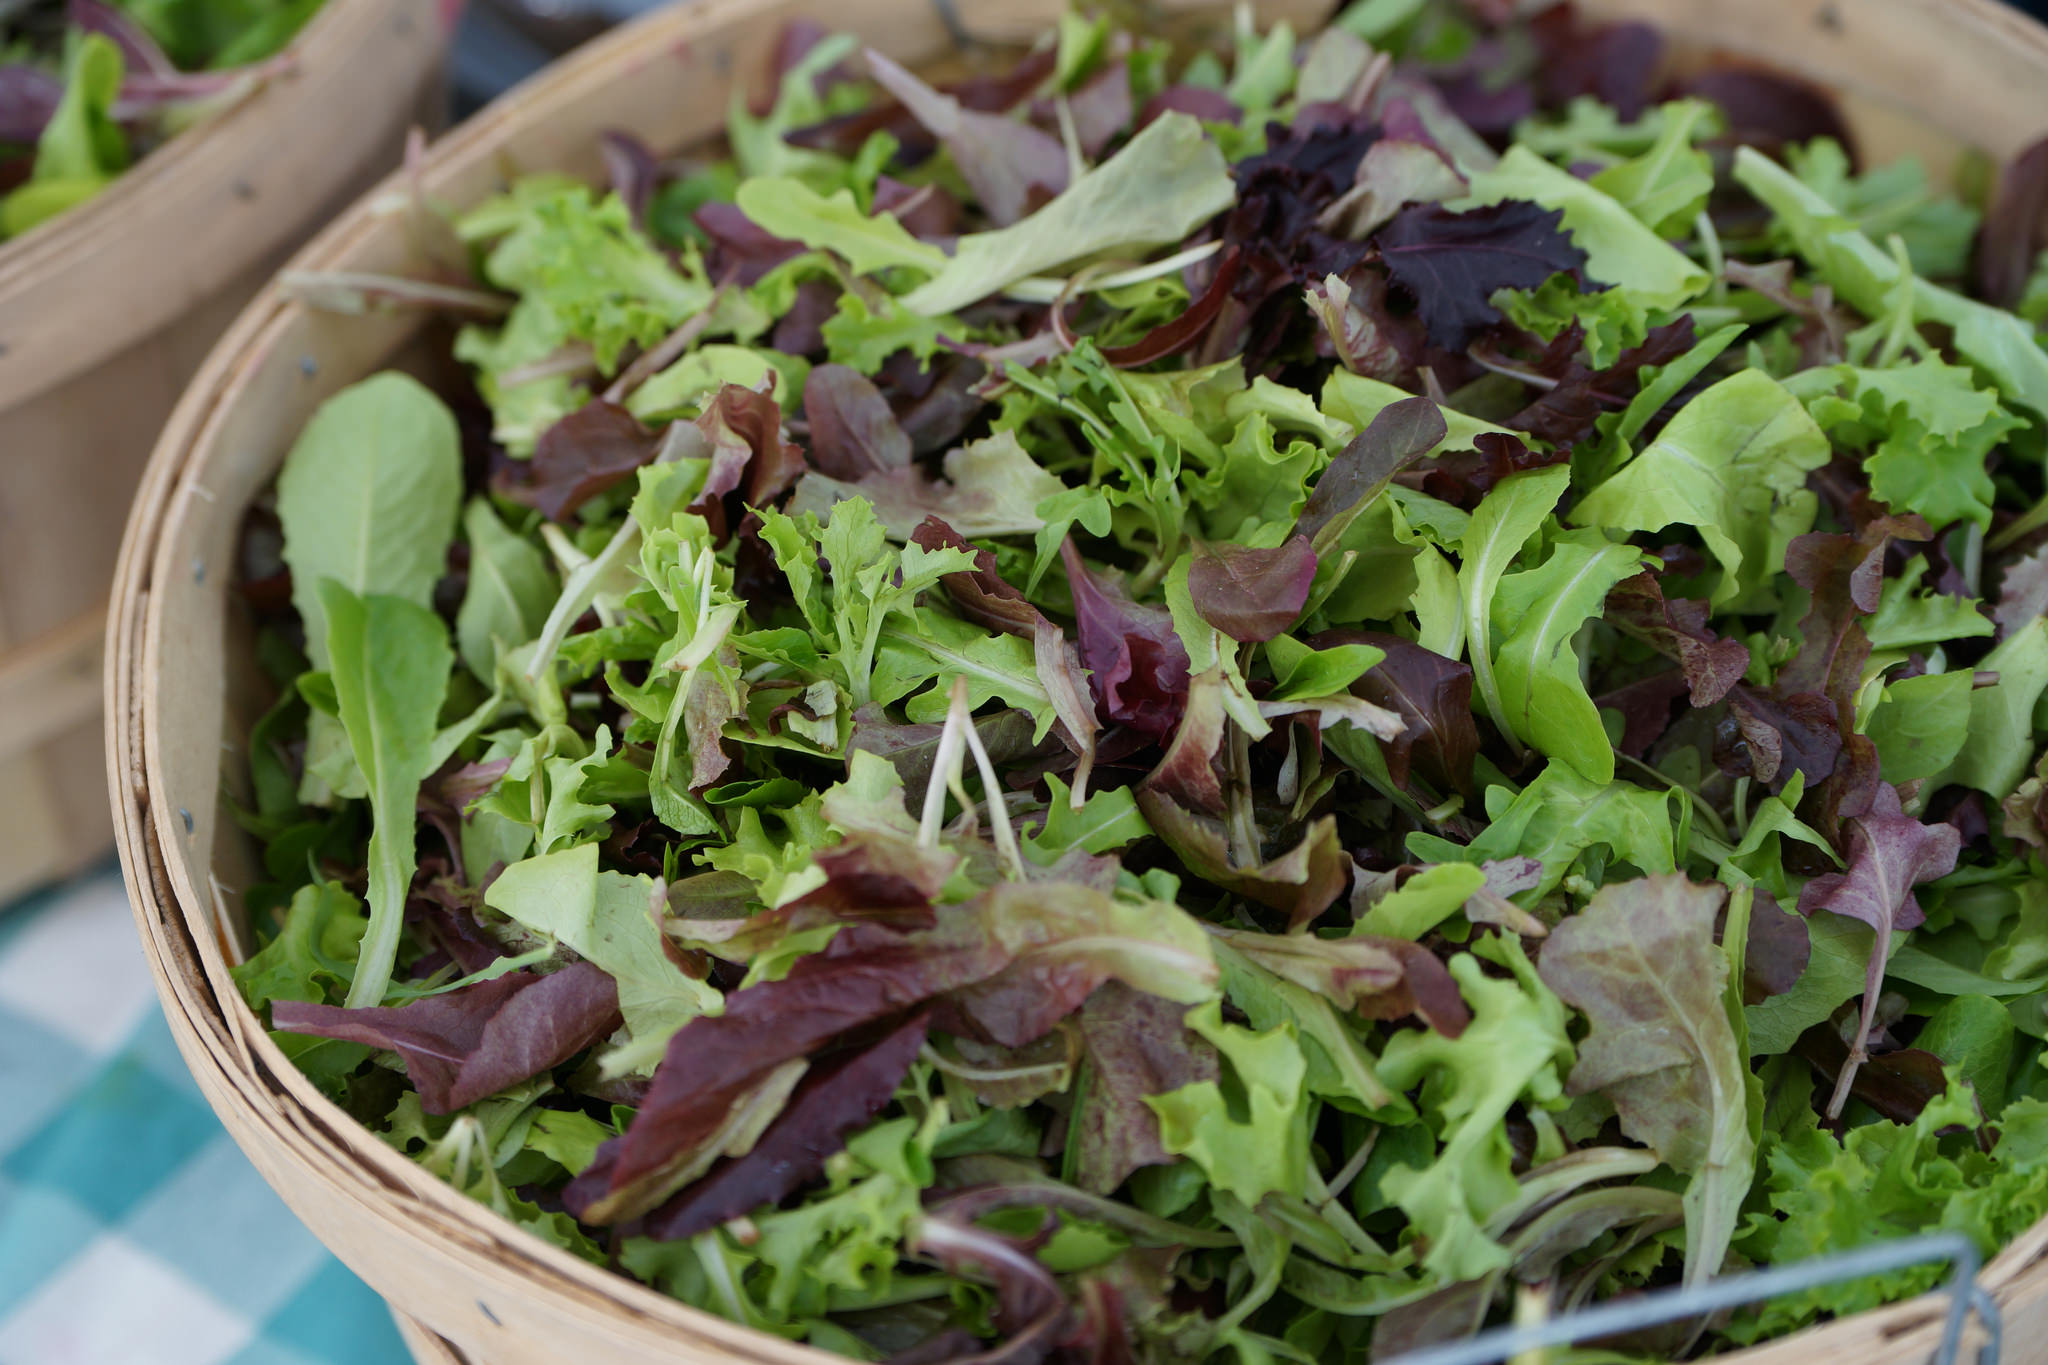 Salad Secrets of the Market